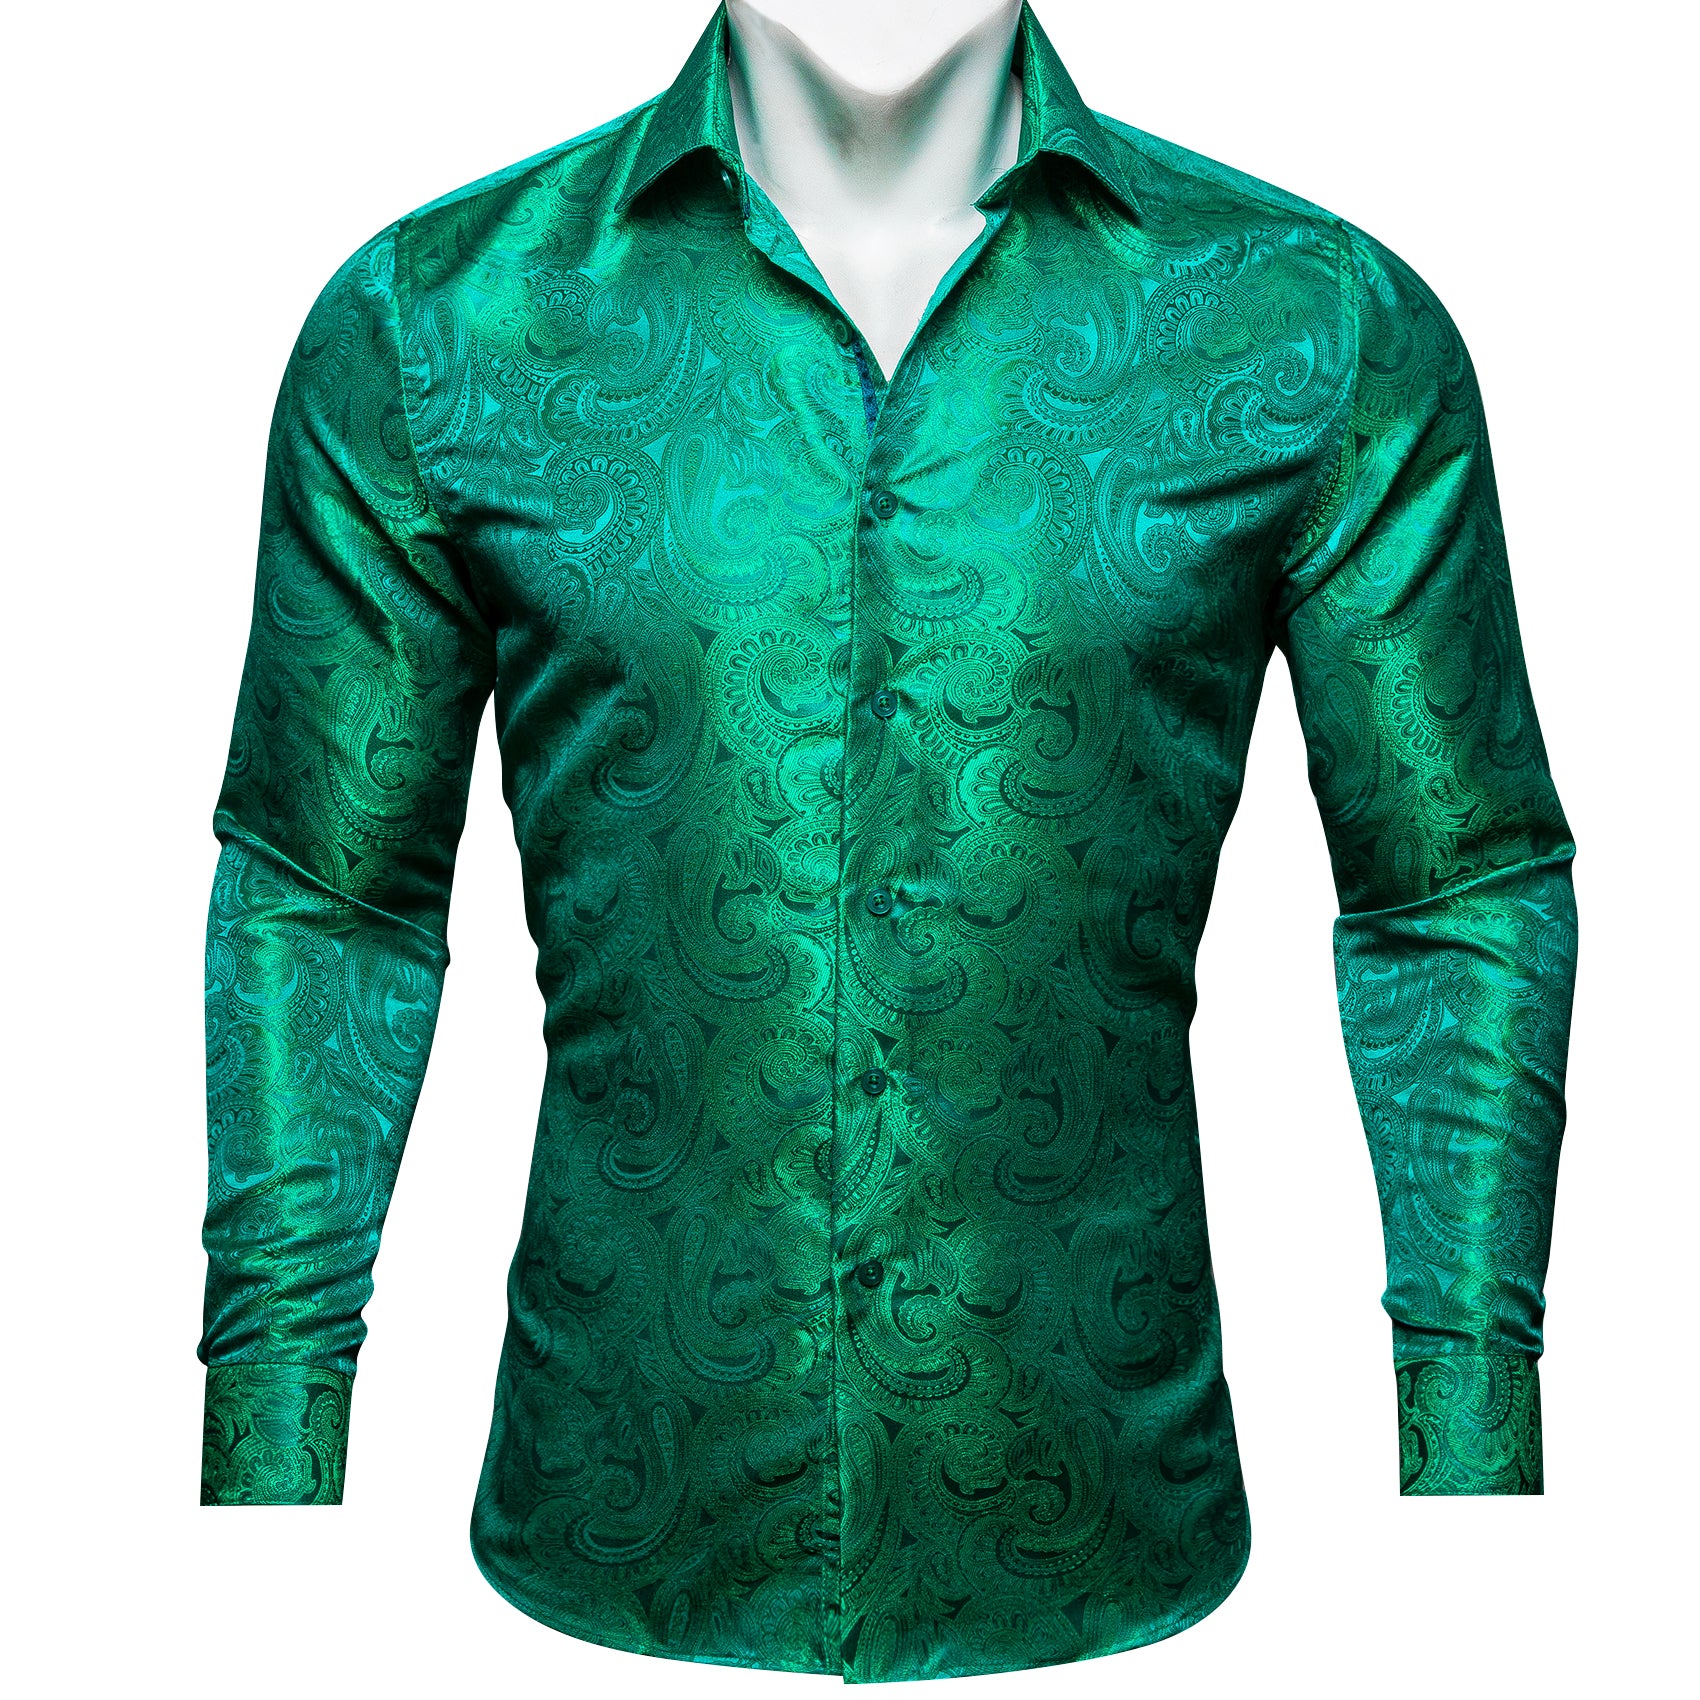 Barry.wang Pale Green Paisley Silk Men's Shirt